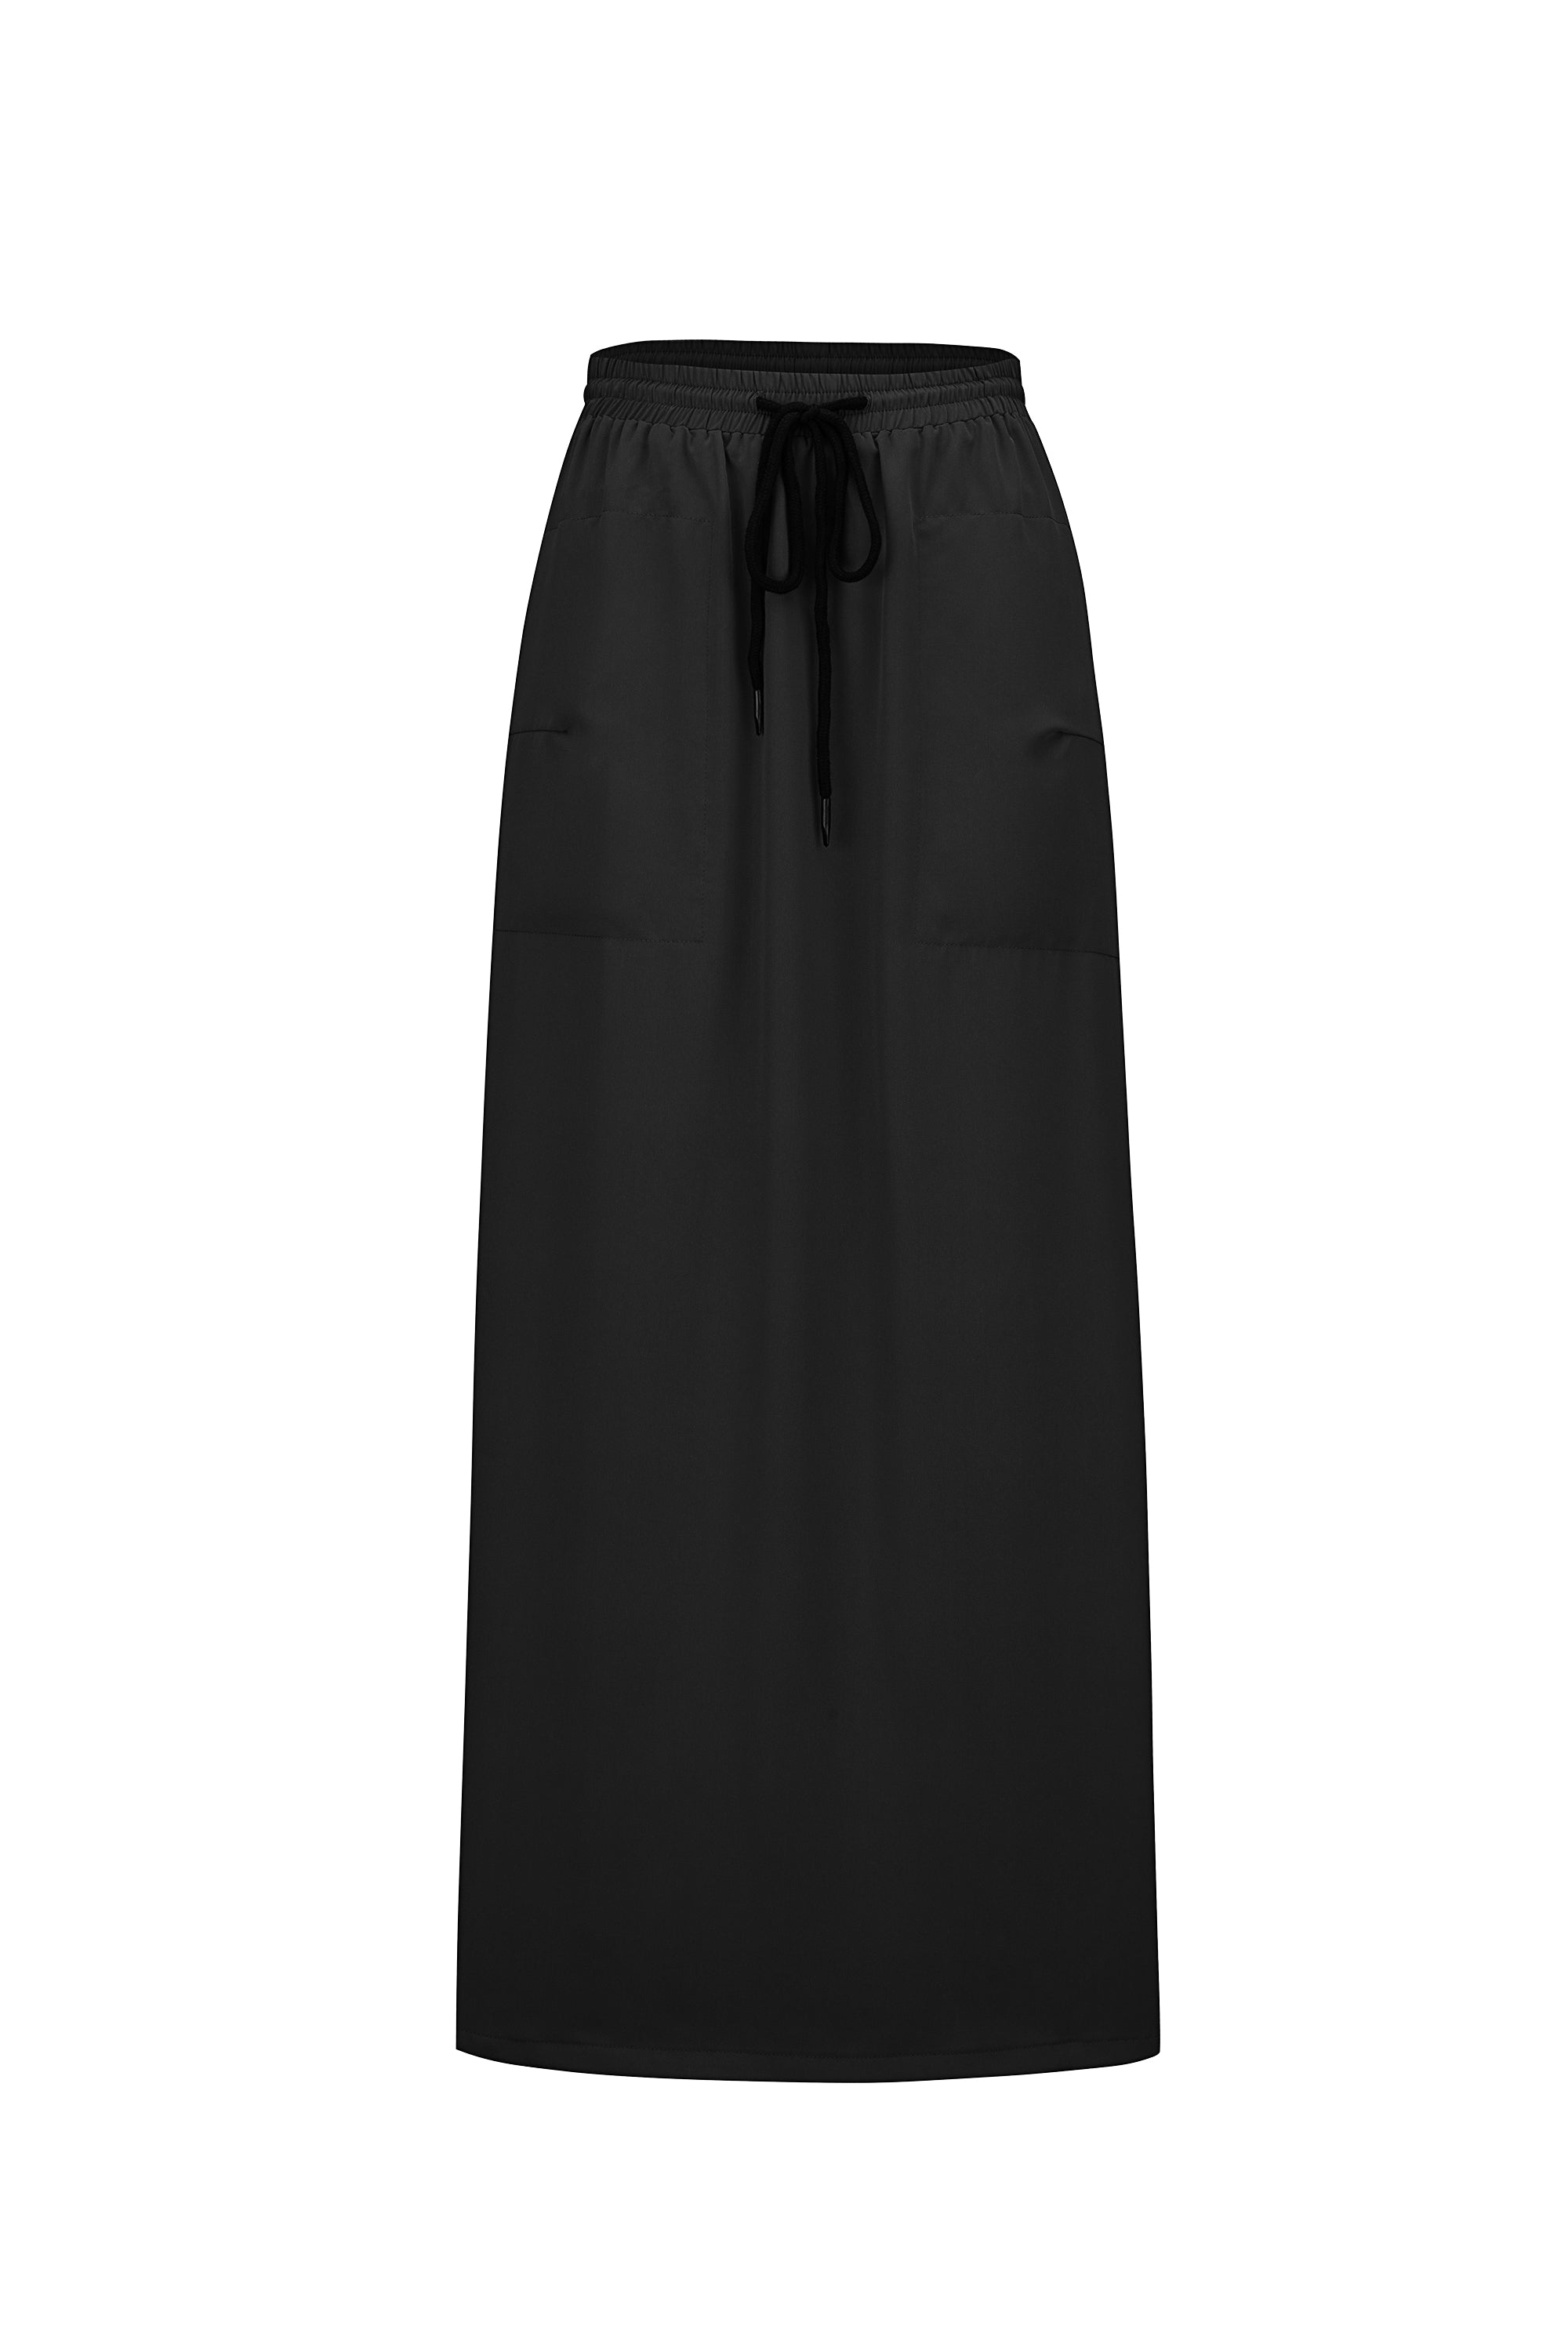 MG00024Blk-skirt